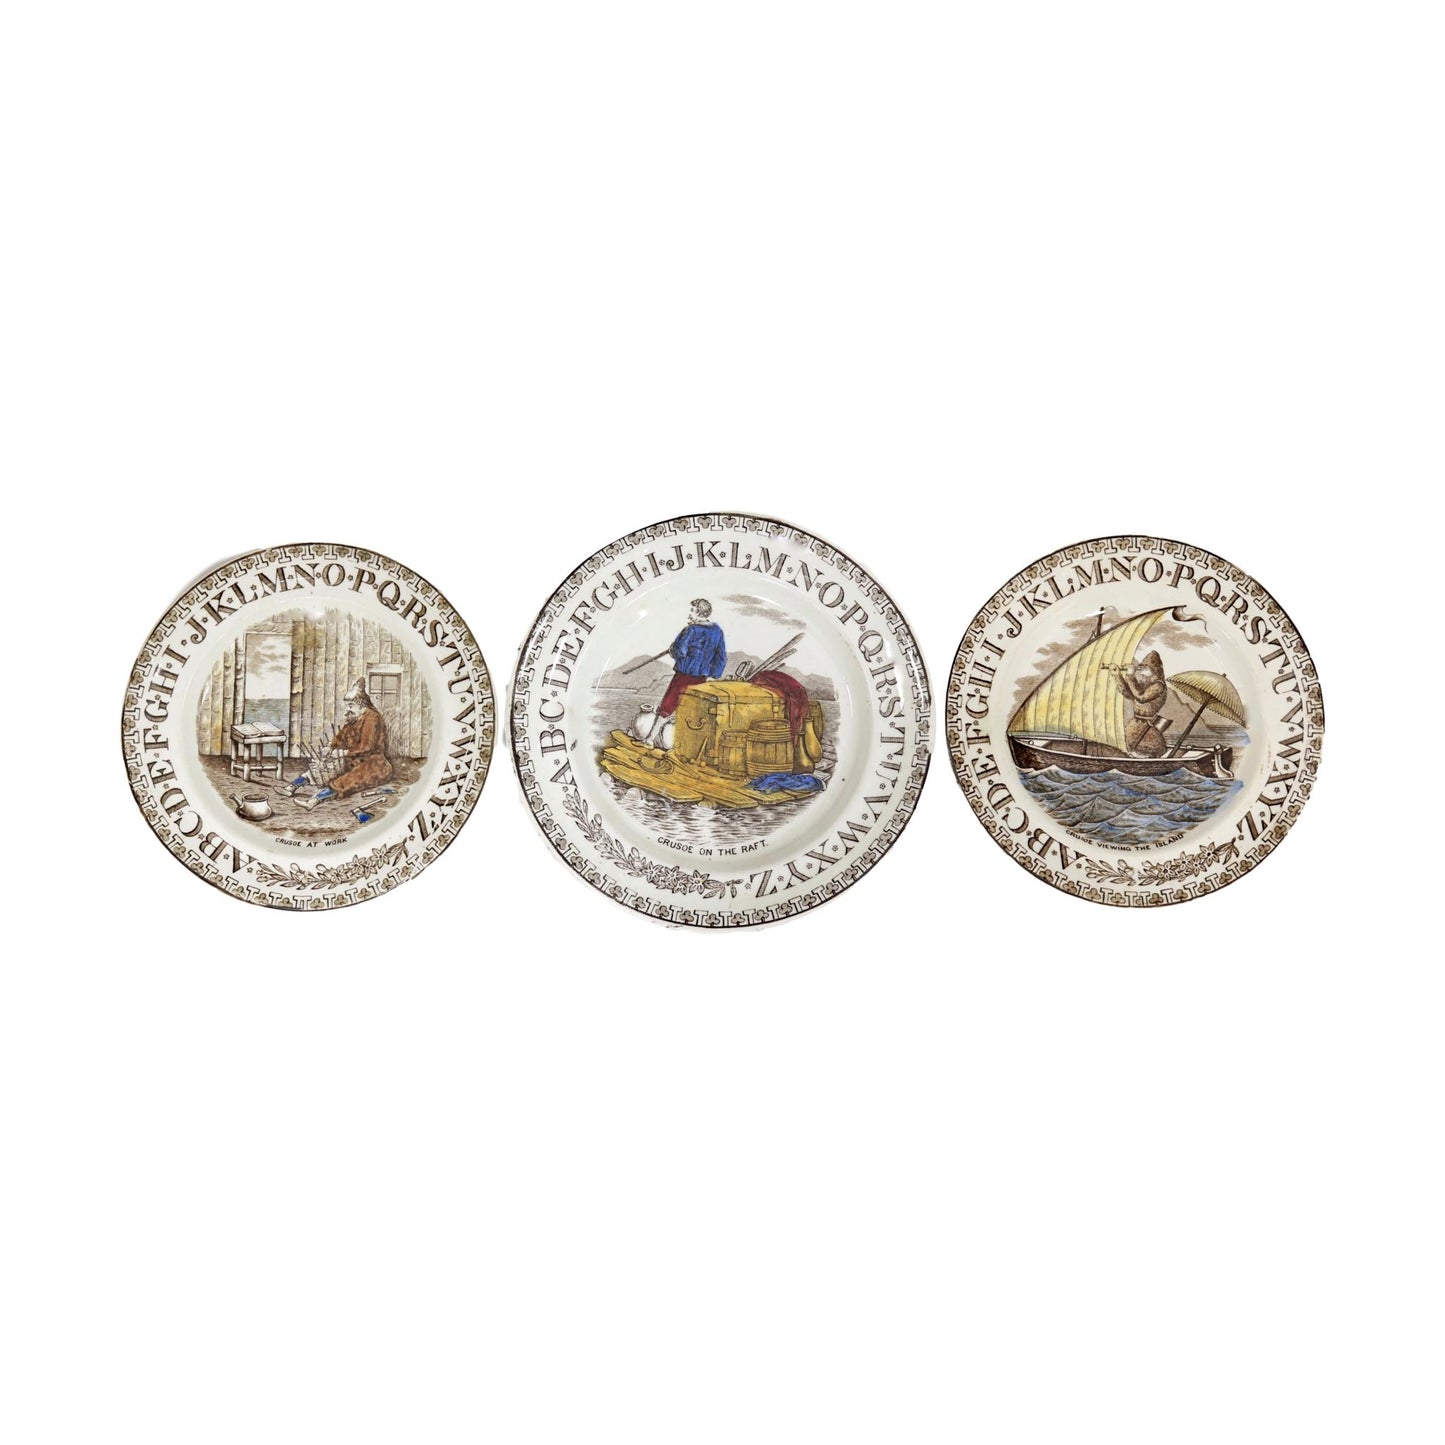 19th-Century Robinson Crusoe "A B C" Plates, Set of 3